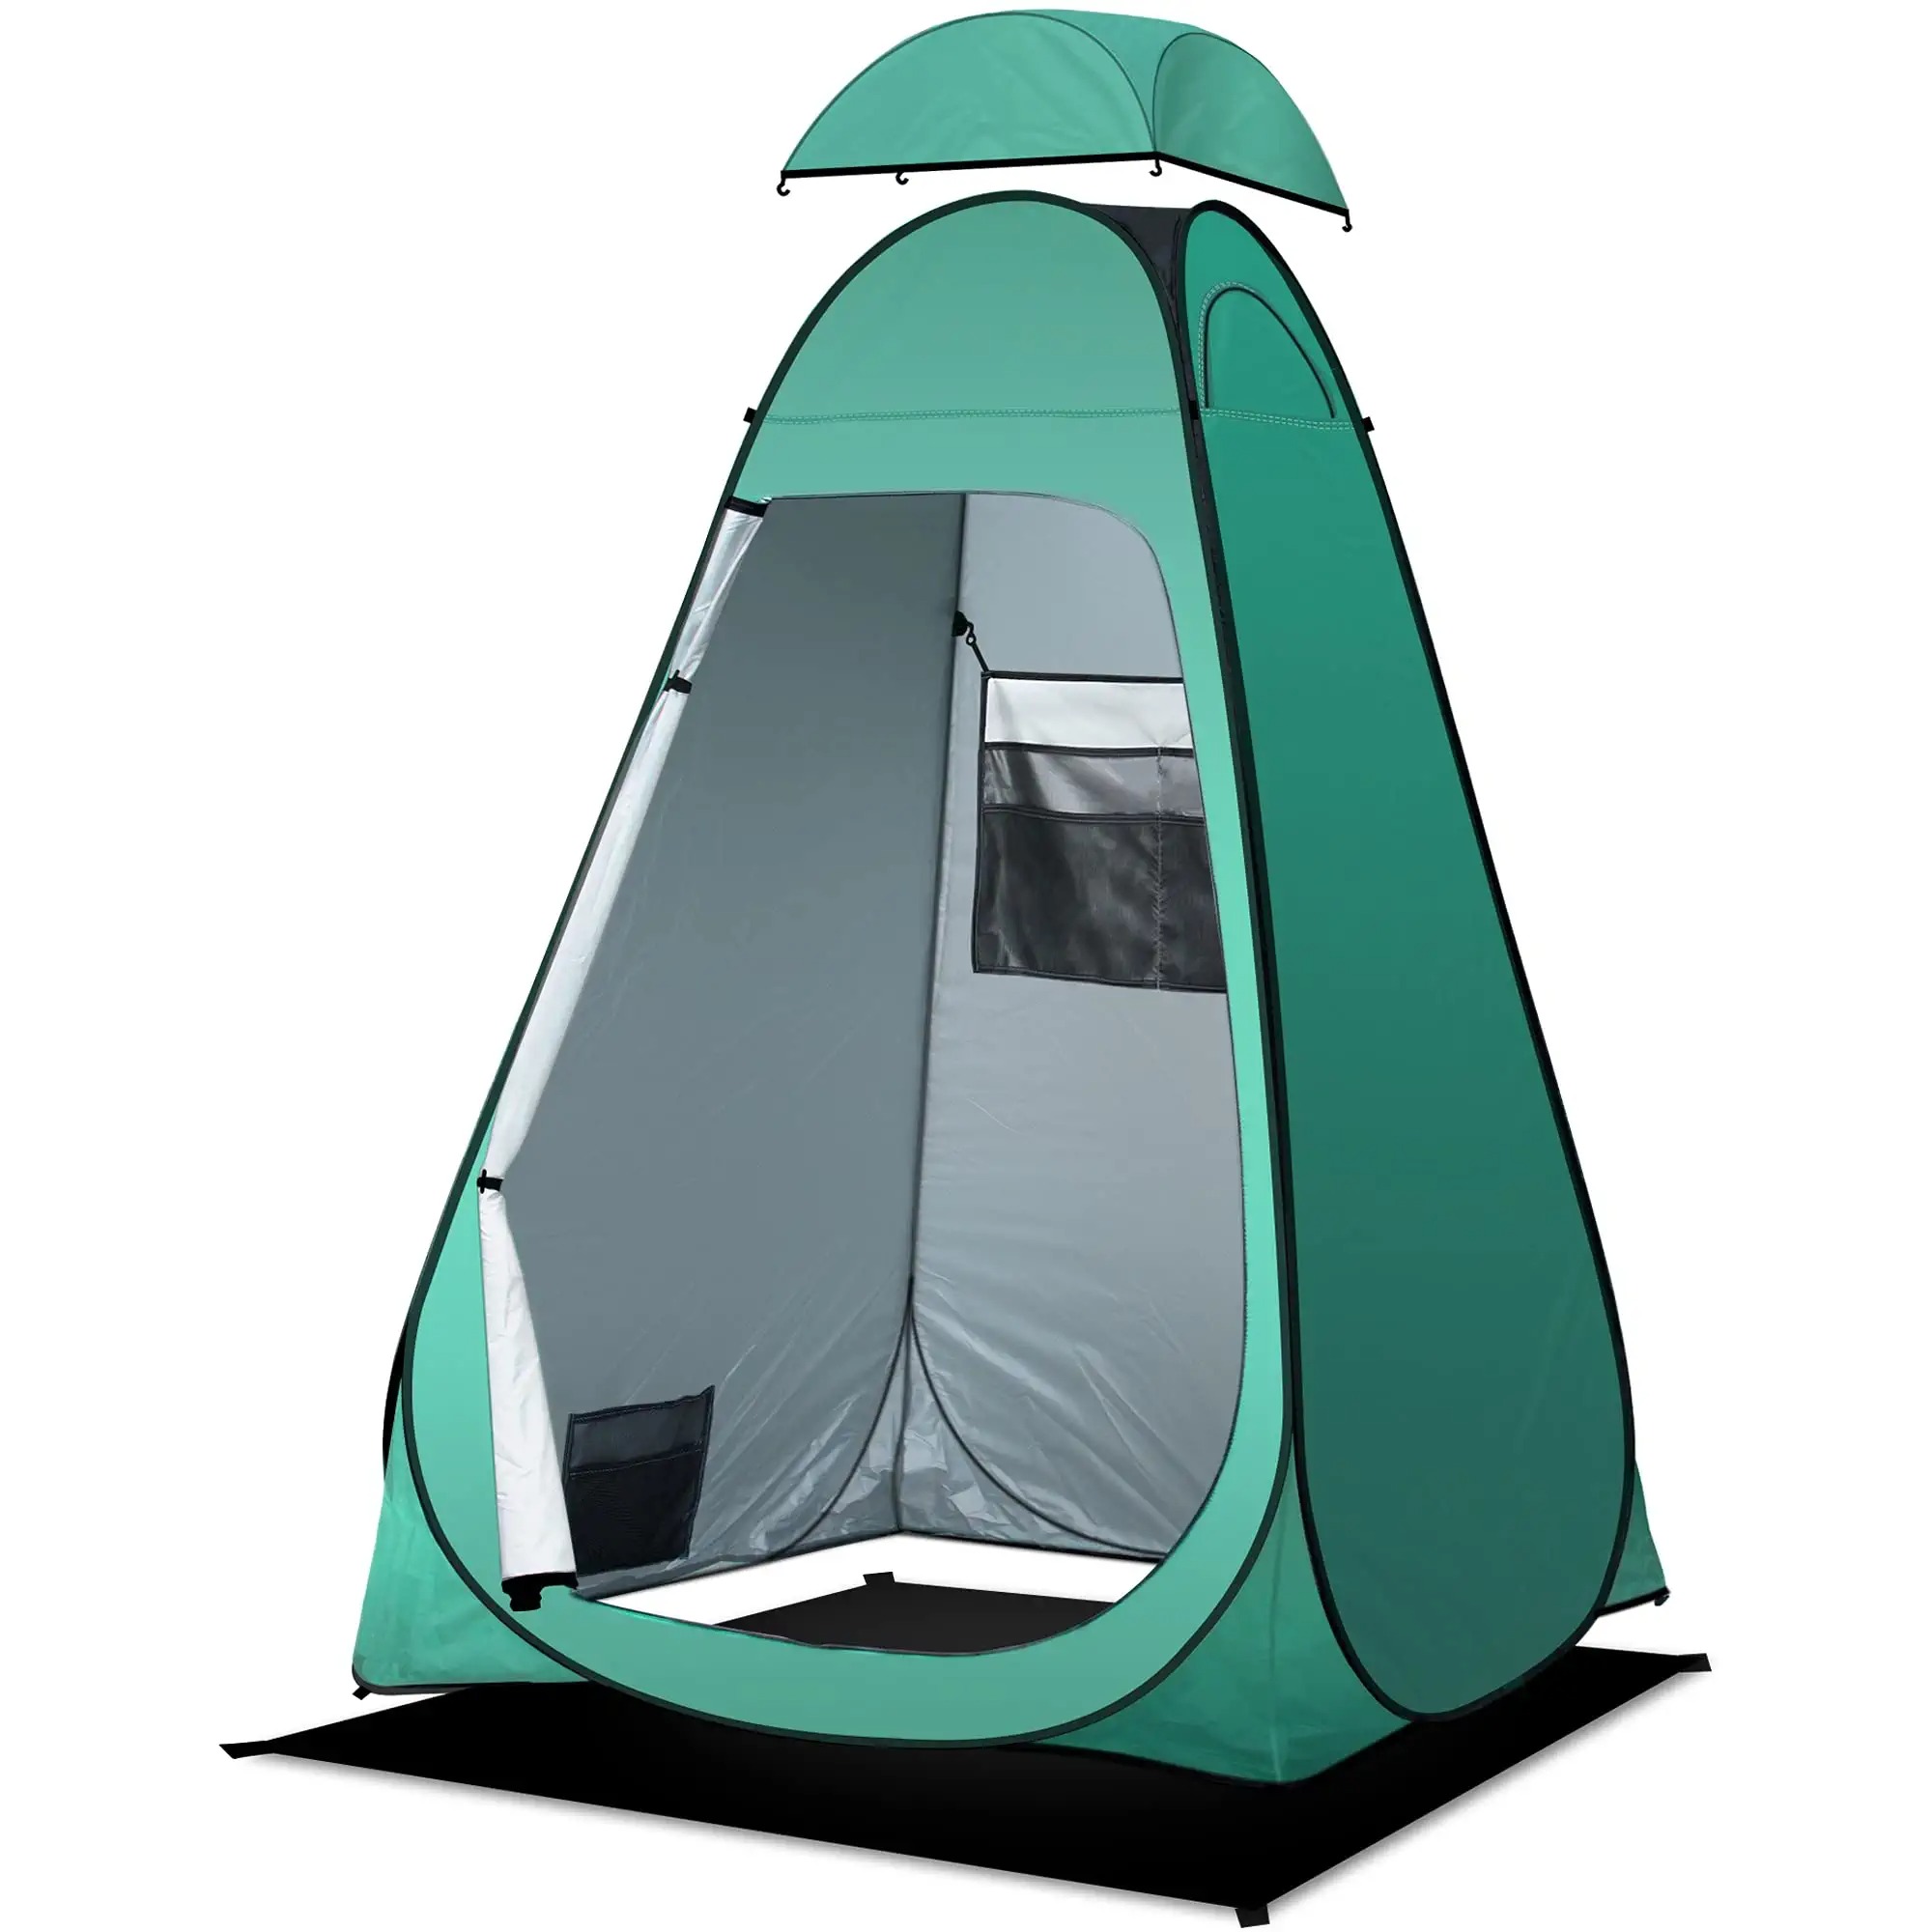 Shower tende pop-up privacy tent camping portable toilet tende yakakodzera kumisasa